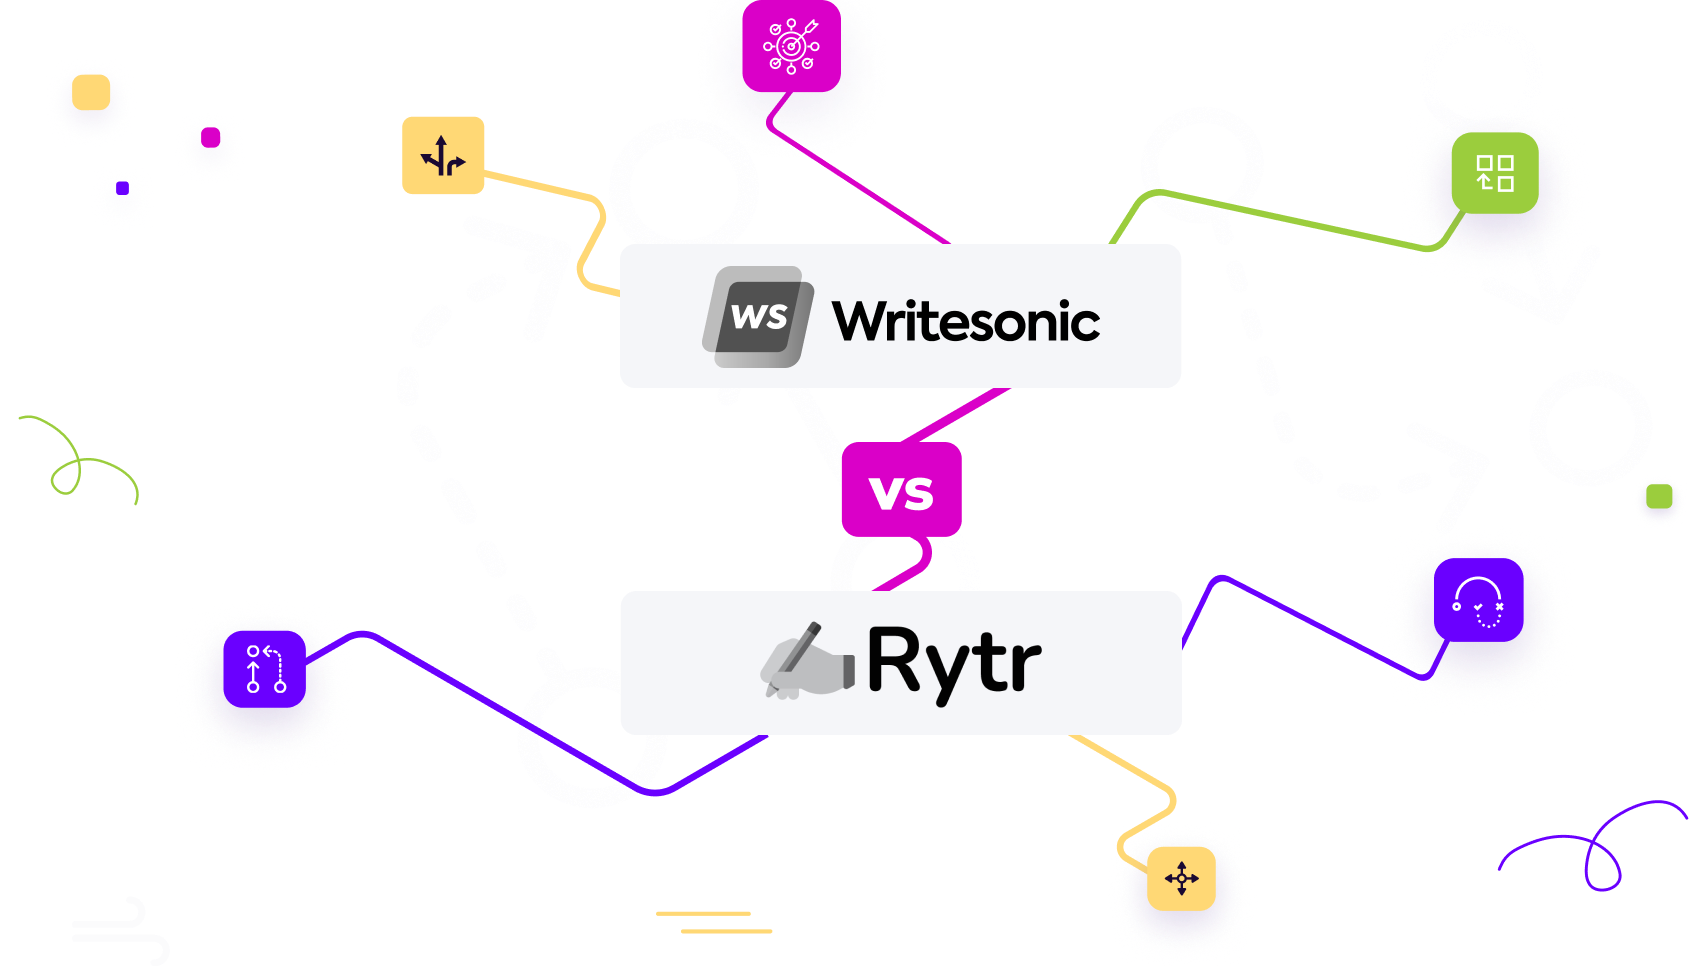 writesonic vs rytr